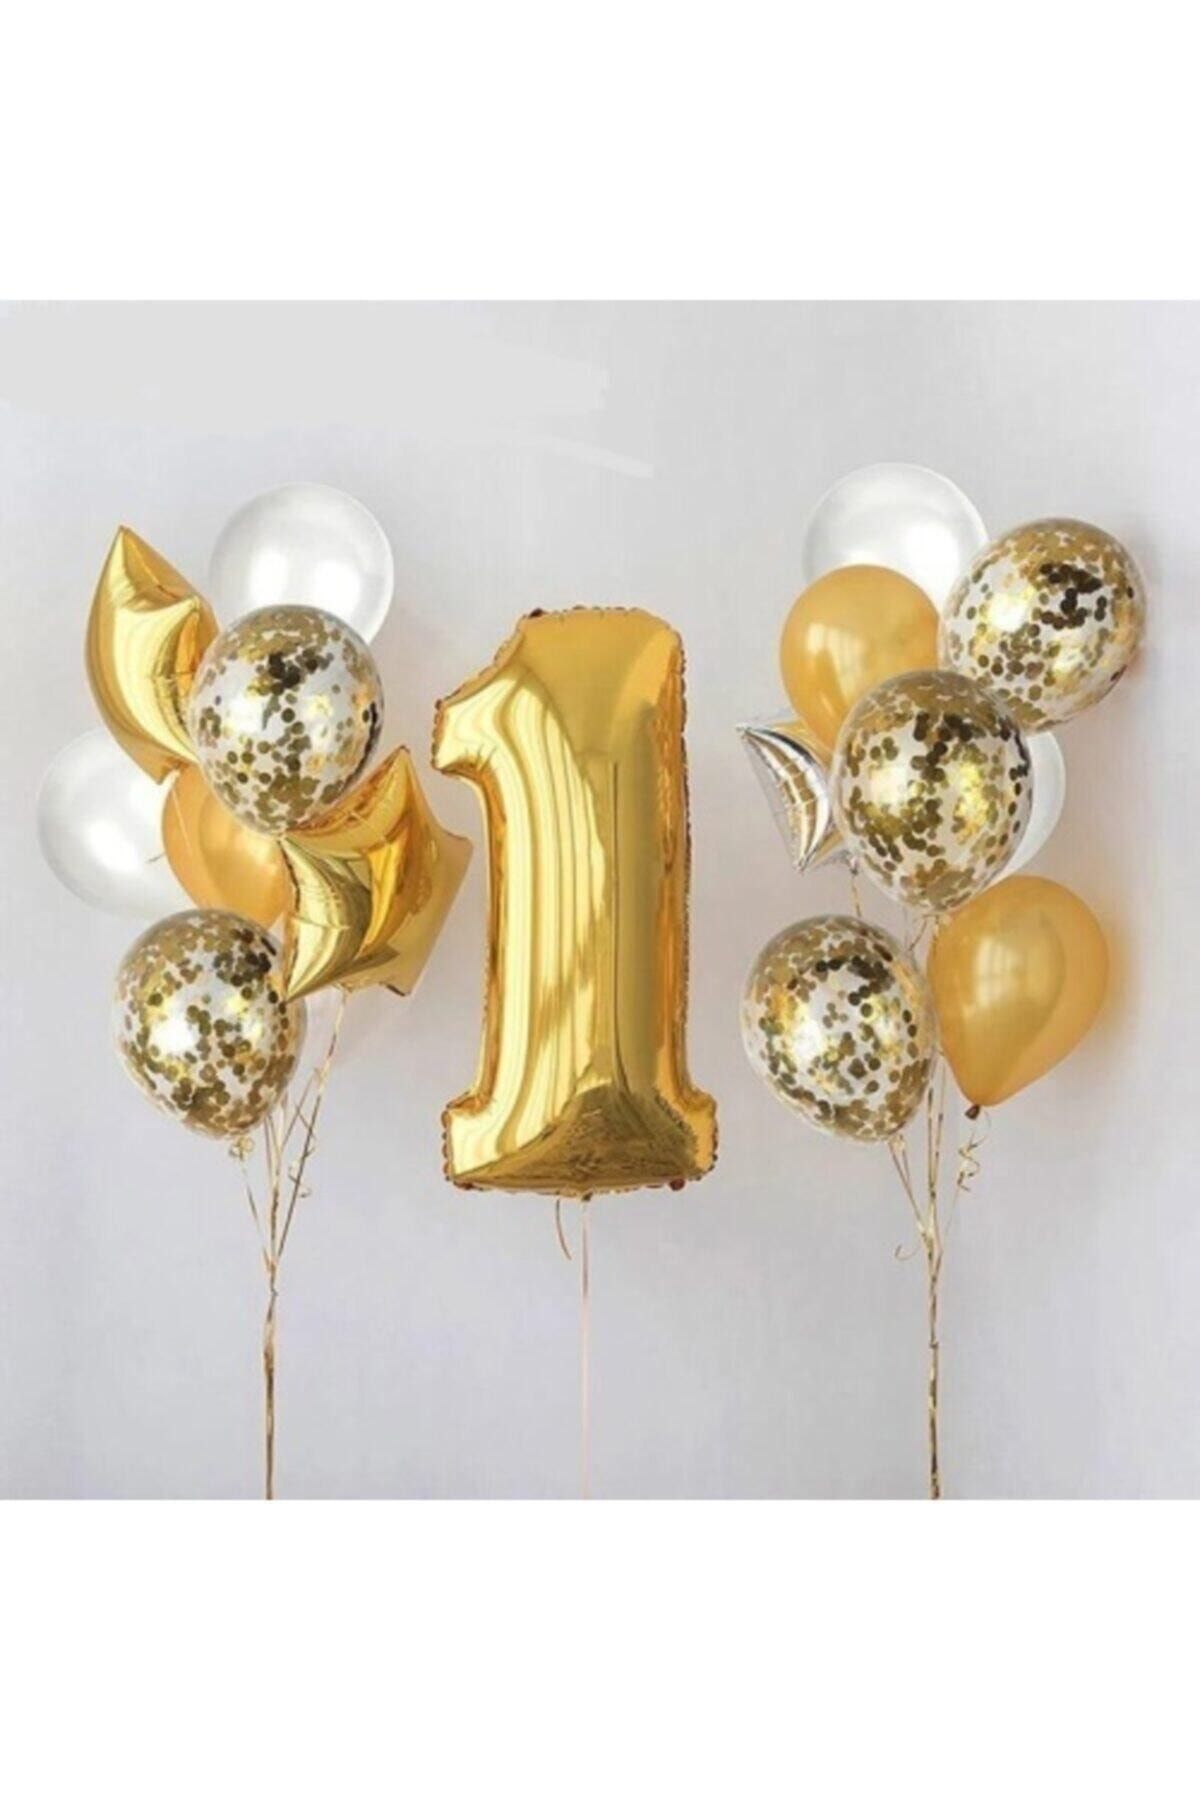 Deniz Party Store 1 Yaş Gold Folyo Balon Şeffaf Balon Seti Doğum Günü Parti Seti